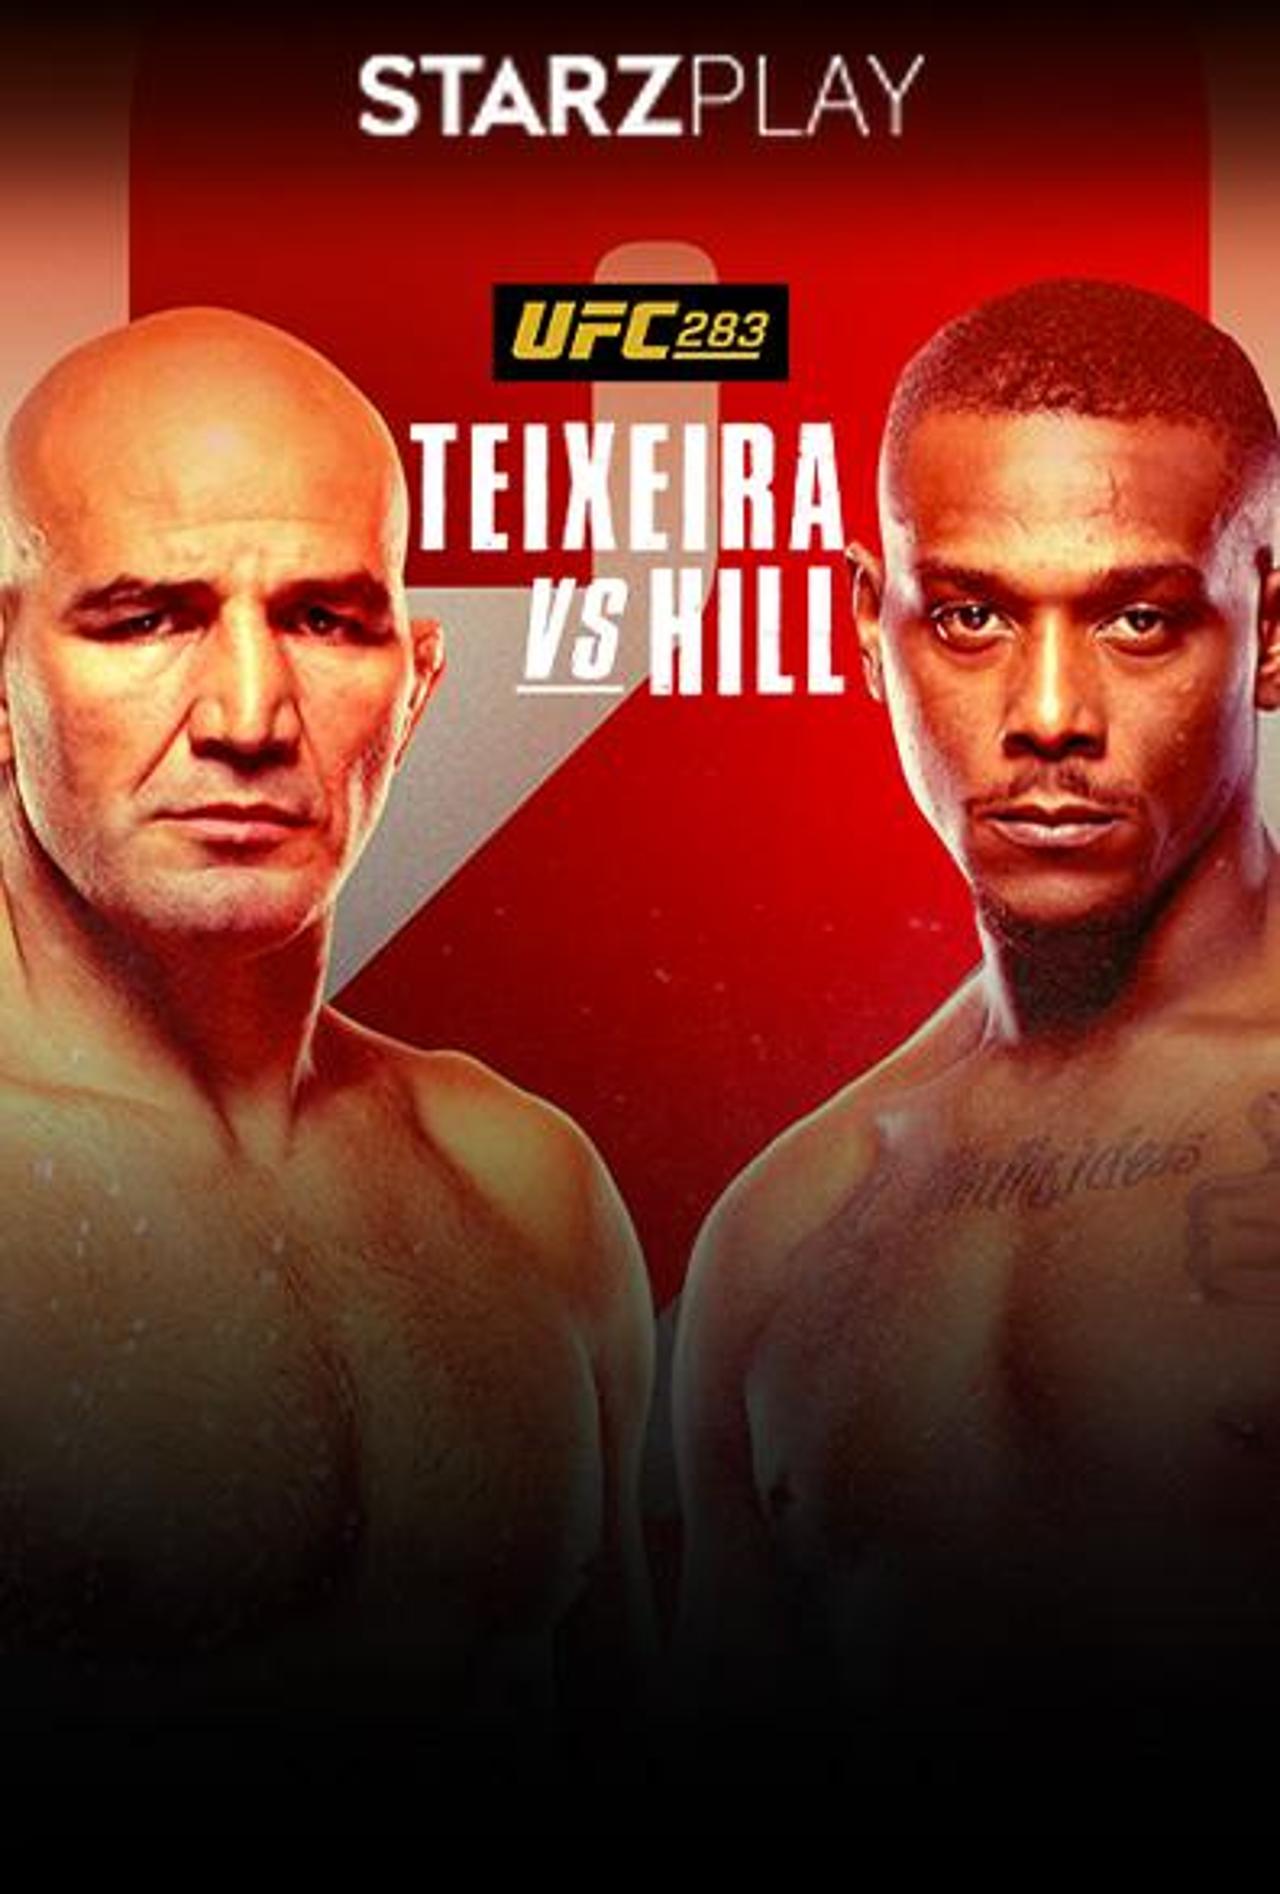 stc tv UFC 283 Teixeira vs